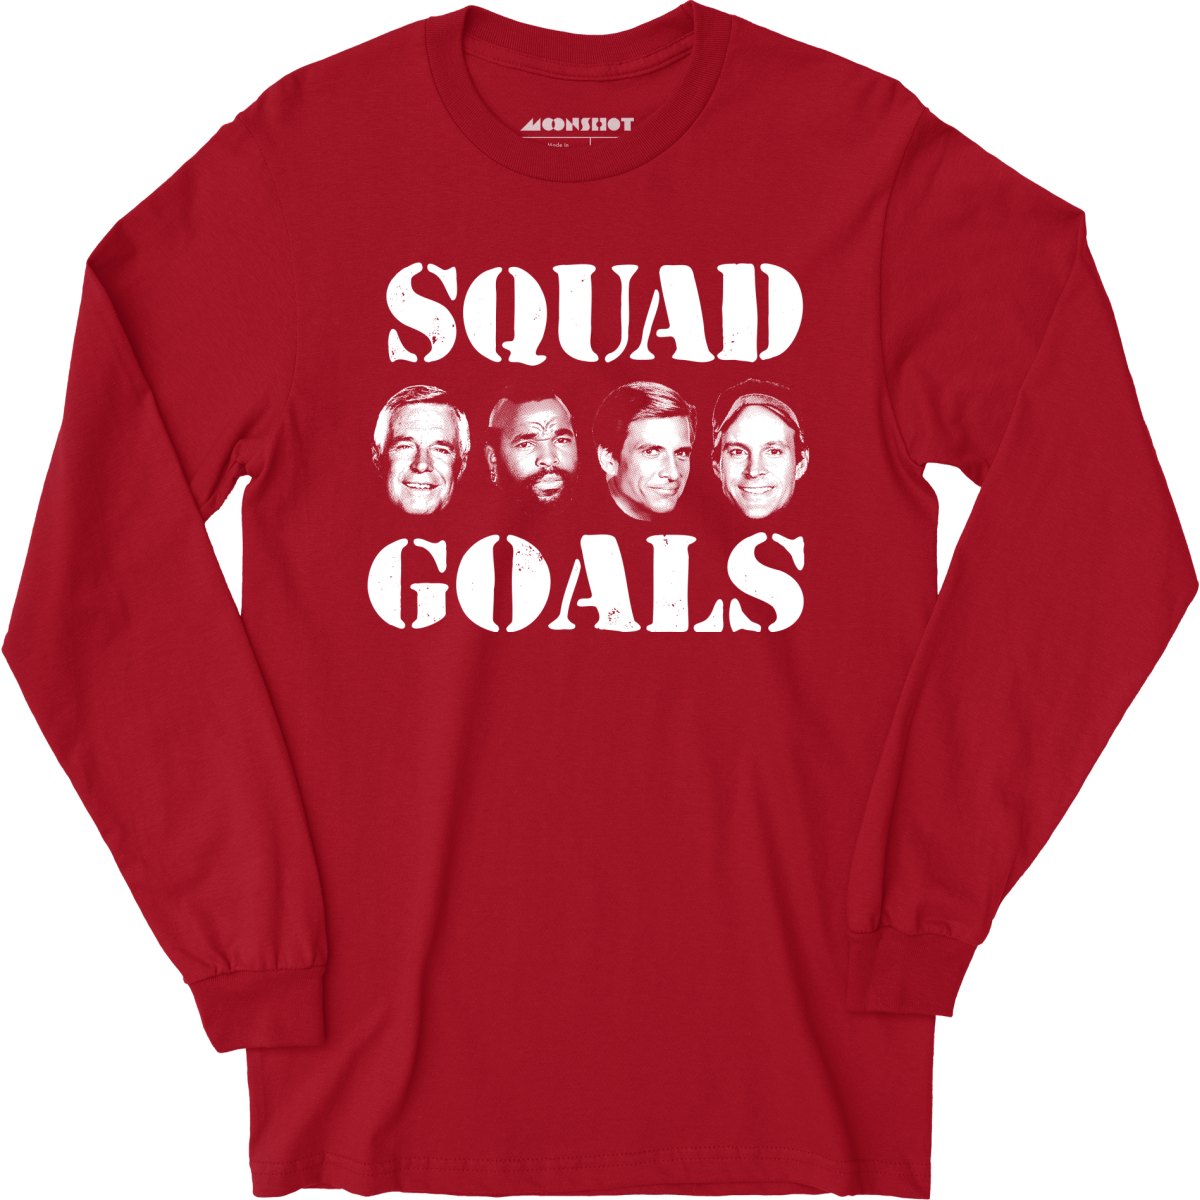 Squad Goals - A-Team - Long Sleeve T-Shirt